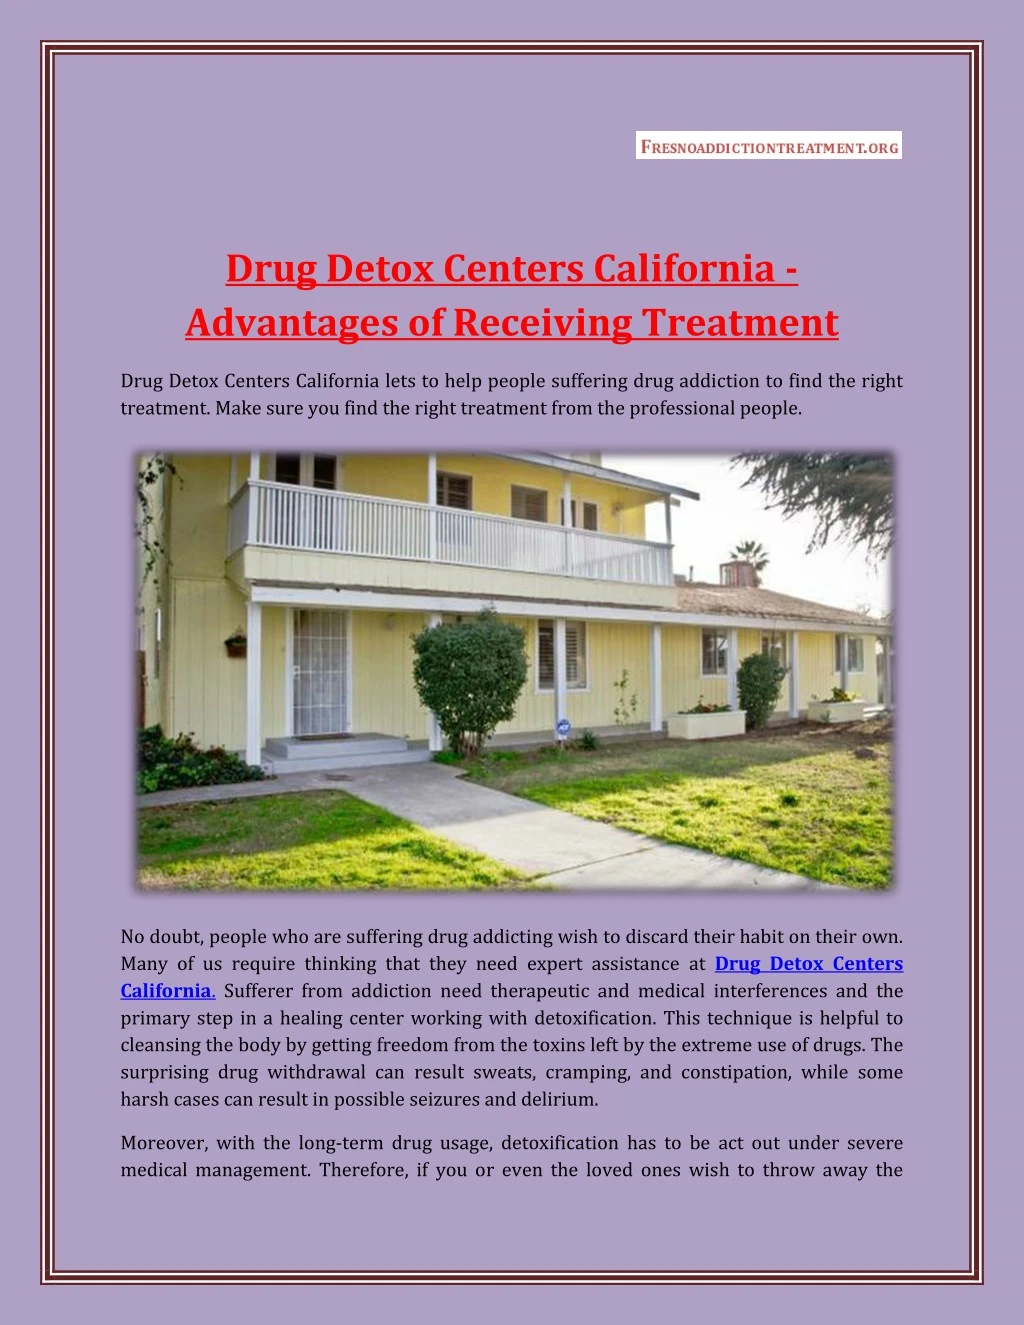 drug detox centers california advantages